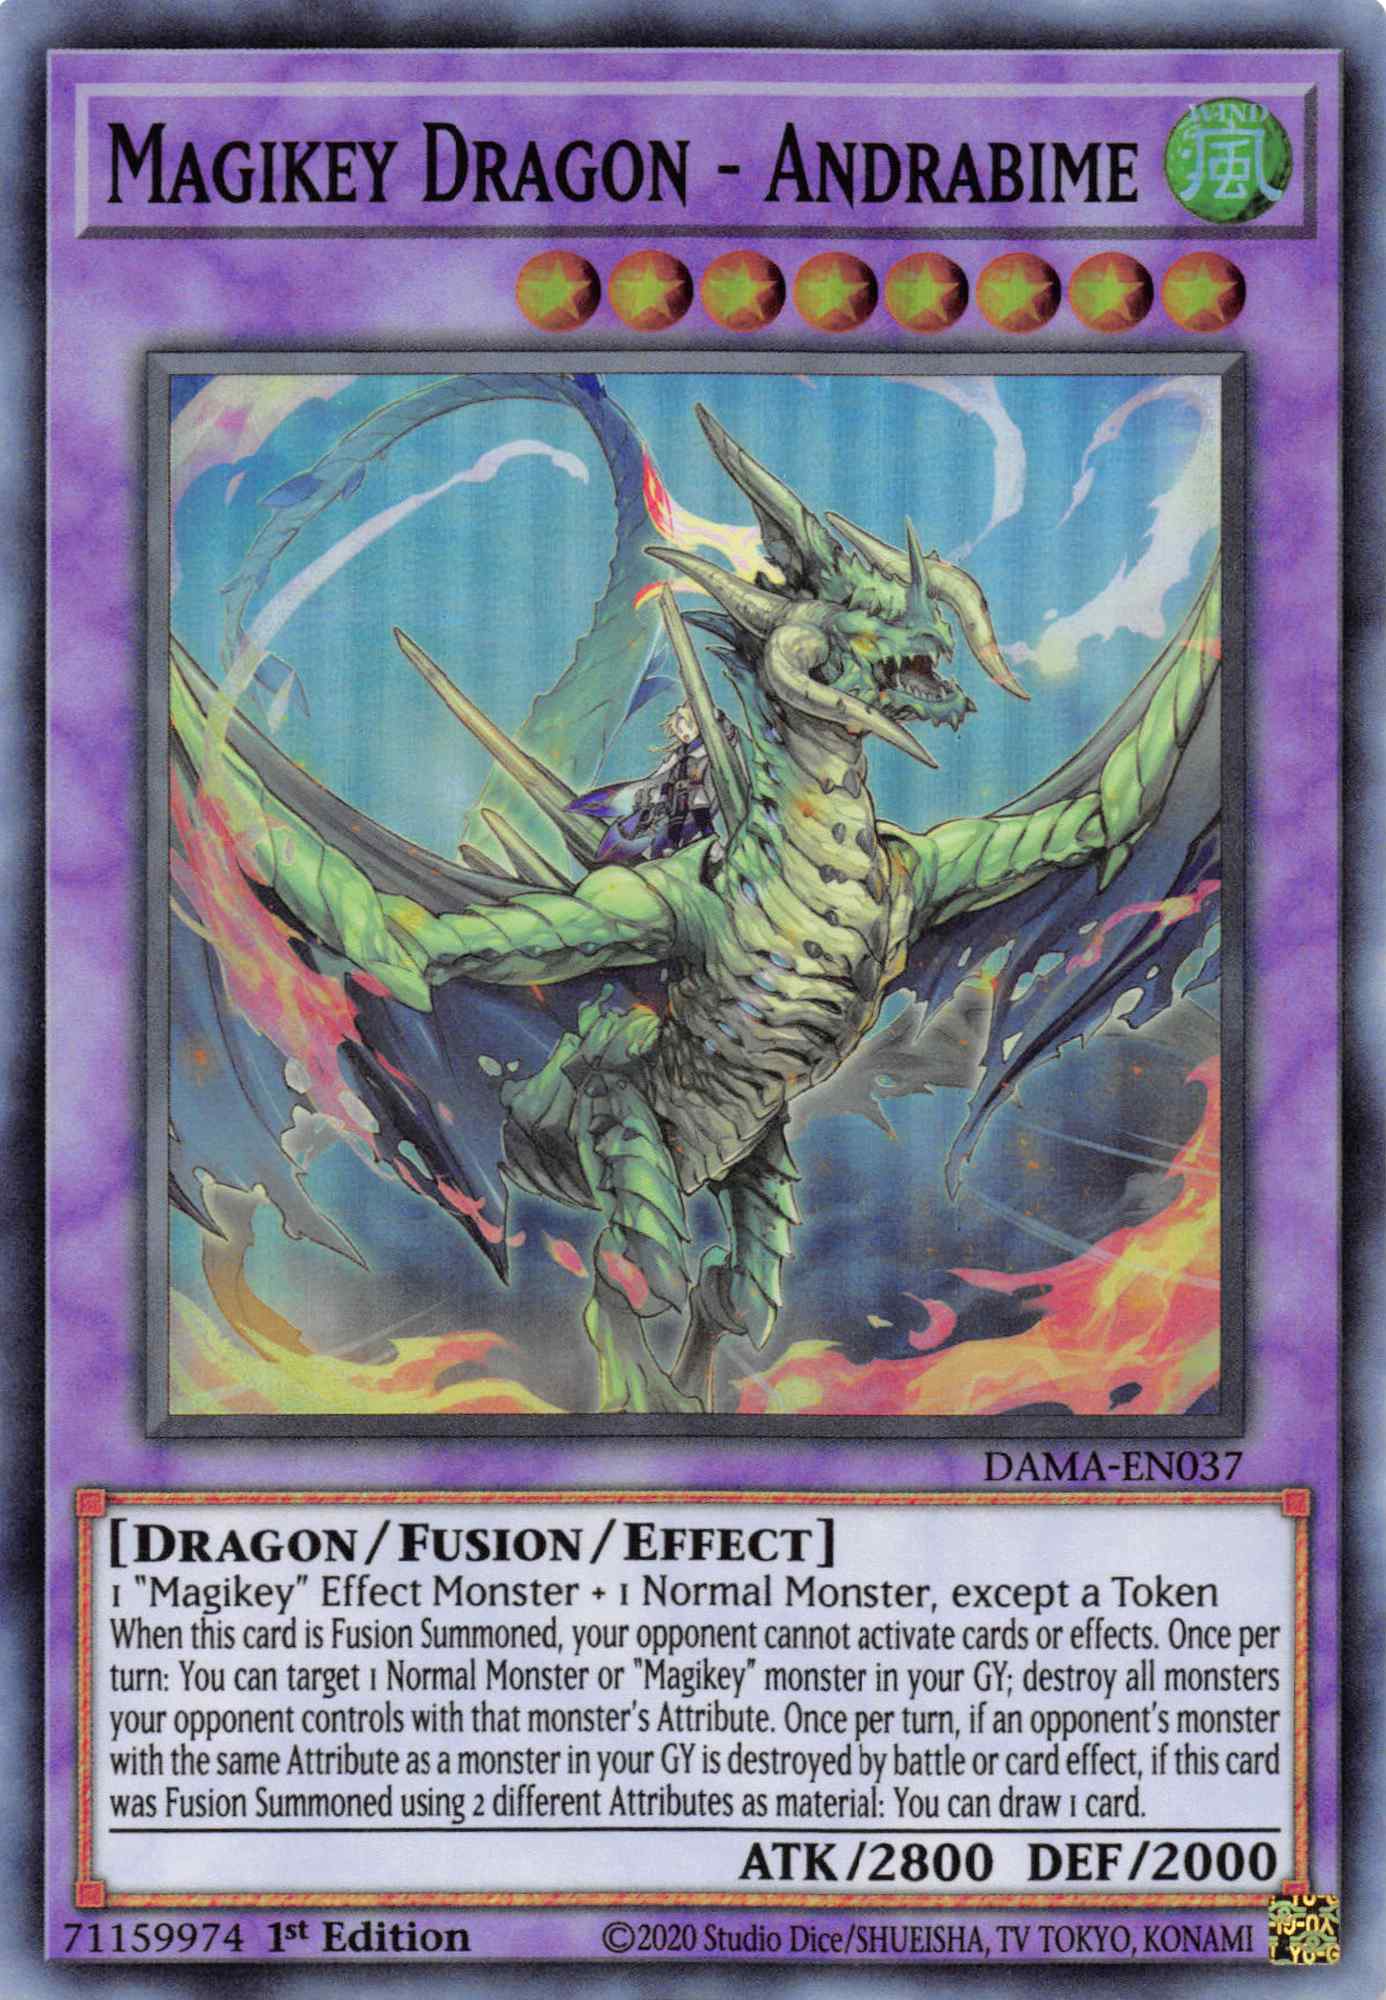 Magikey Dragon - Andrabime [DAMA-EN037] Super Rare